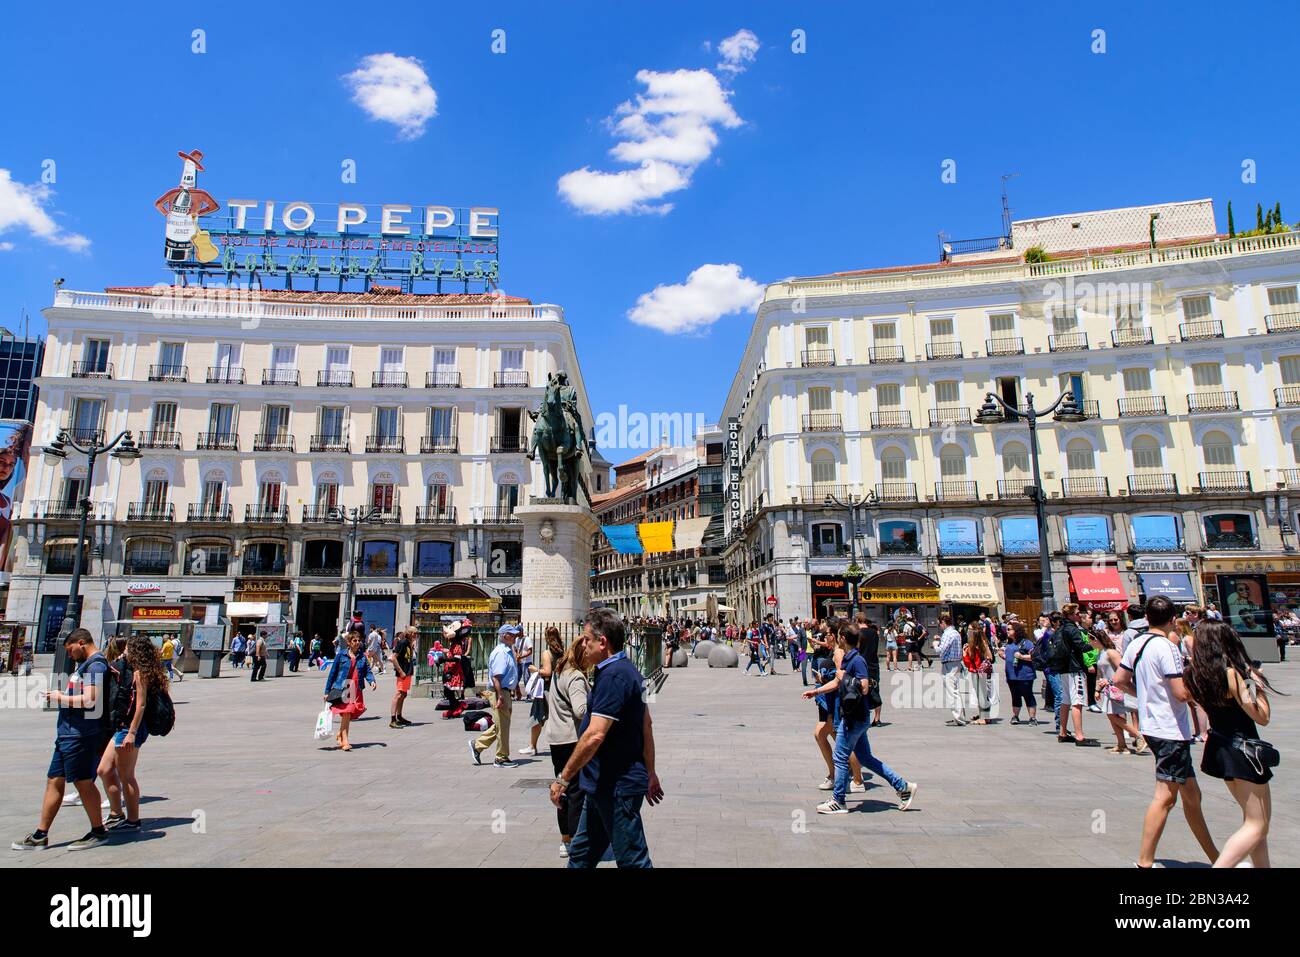 Puerta del sol (Gate of the Sun), a public square in Madrid, Spain Stock Photo